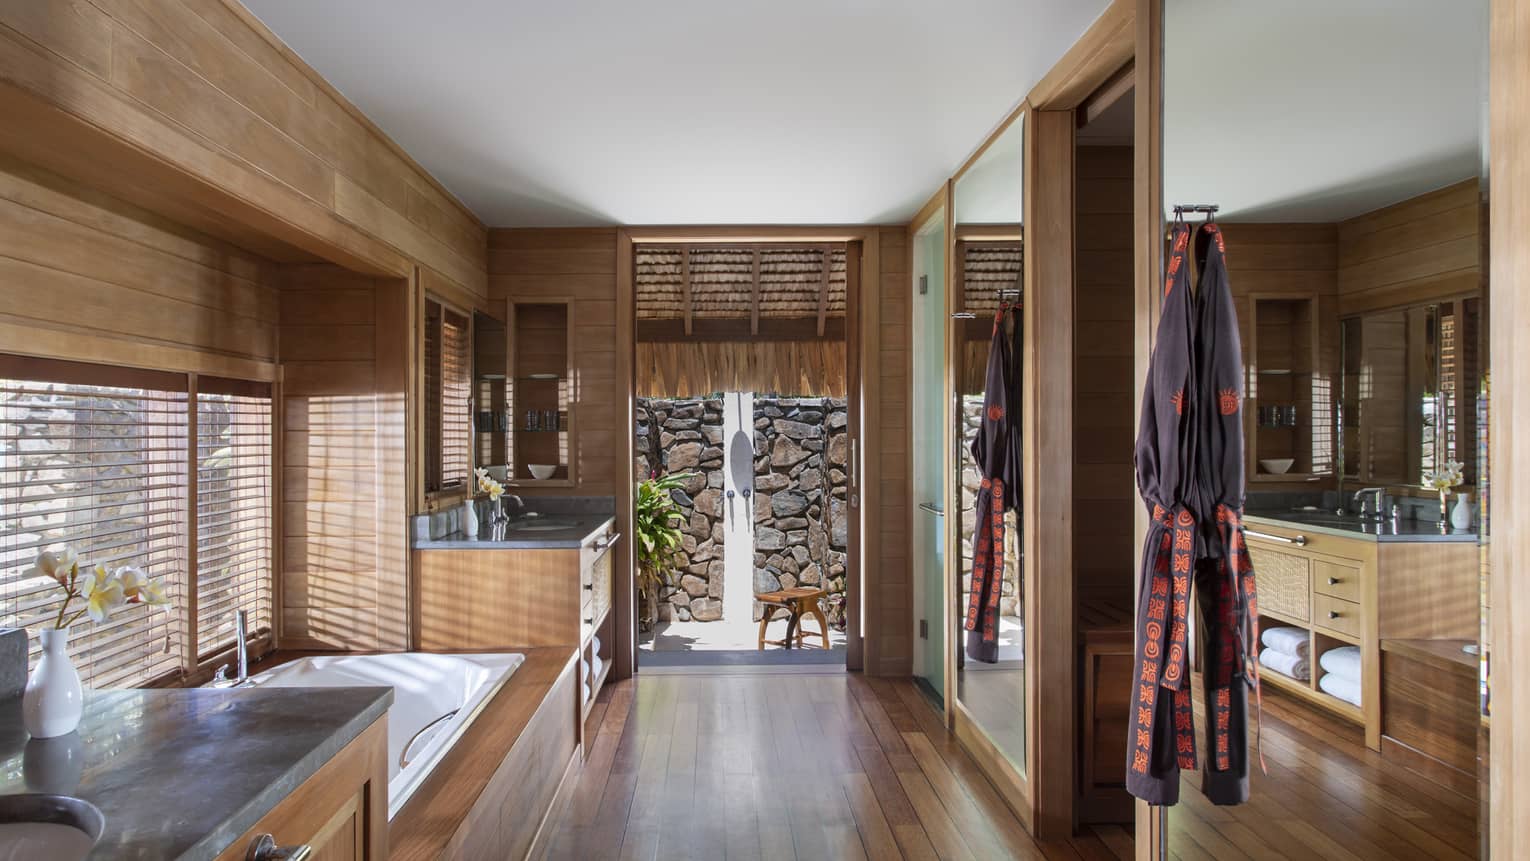 Teak-wood floors and walls in a villa's bathroom